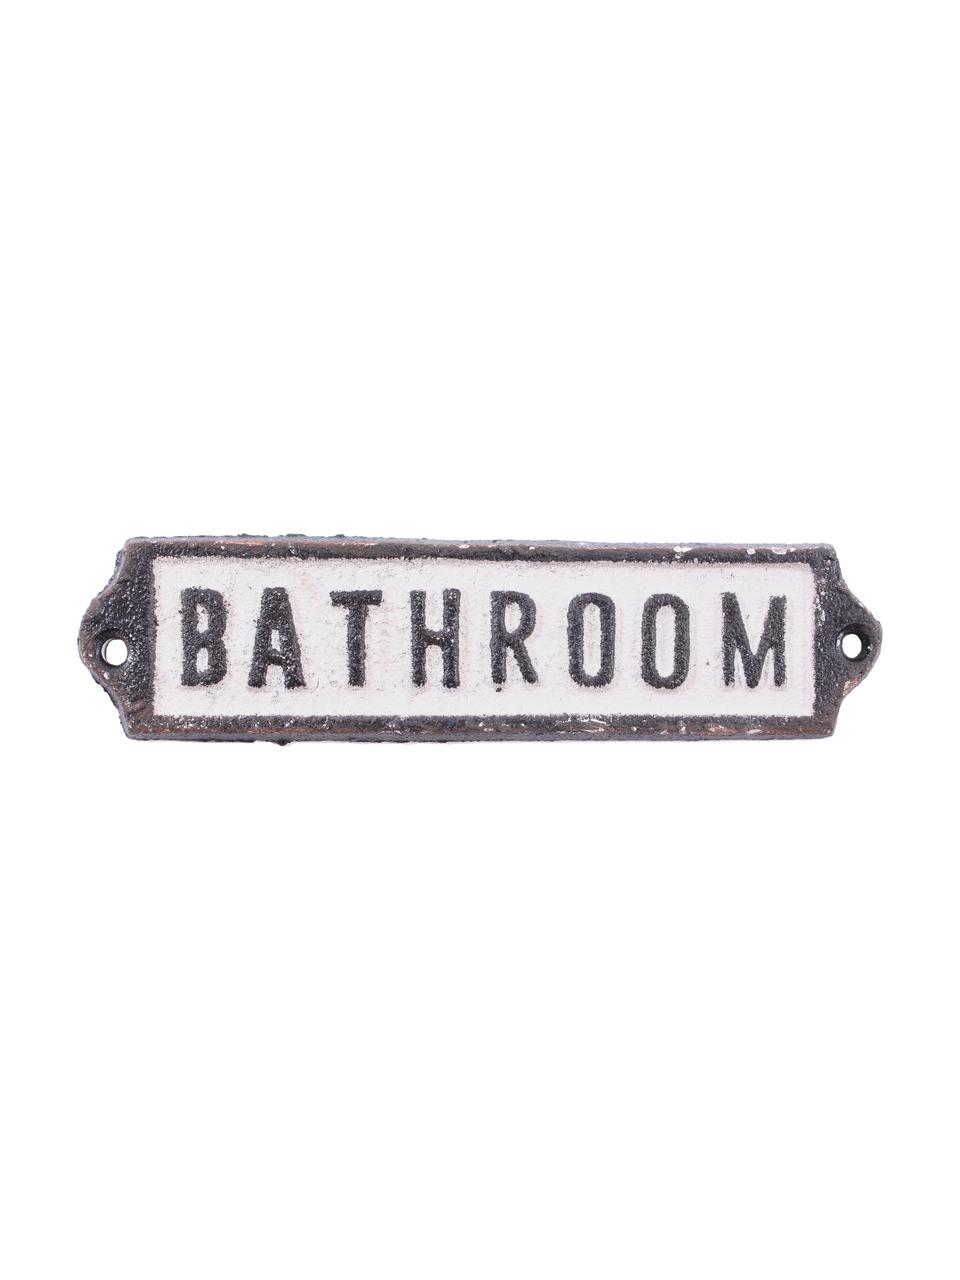 Wandschild Bathroom, Metall, beschichtet, Schwarz, Weiss, 14 x 3 cm